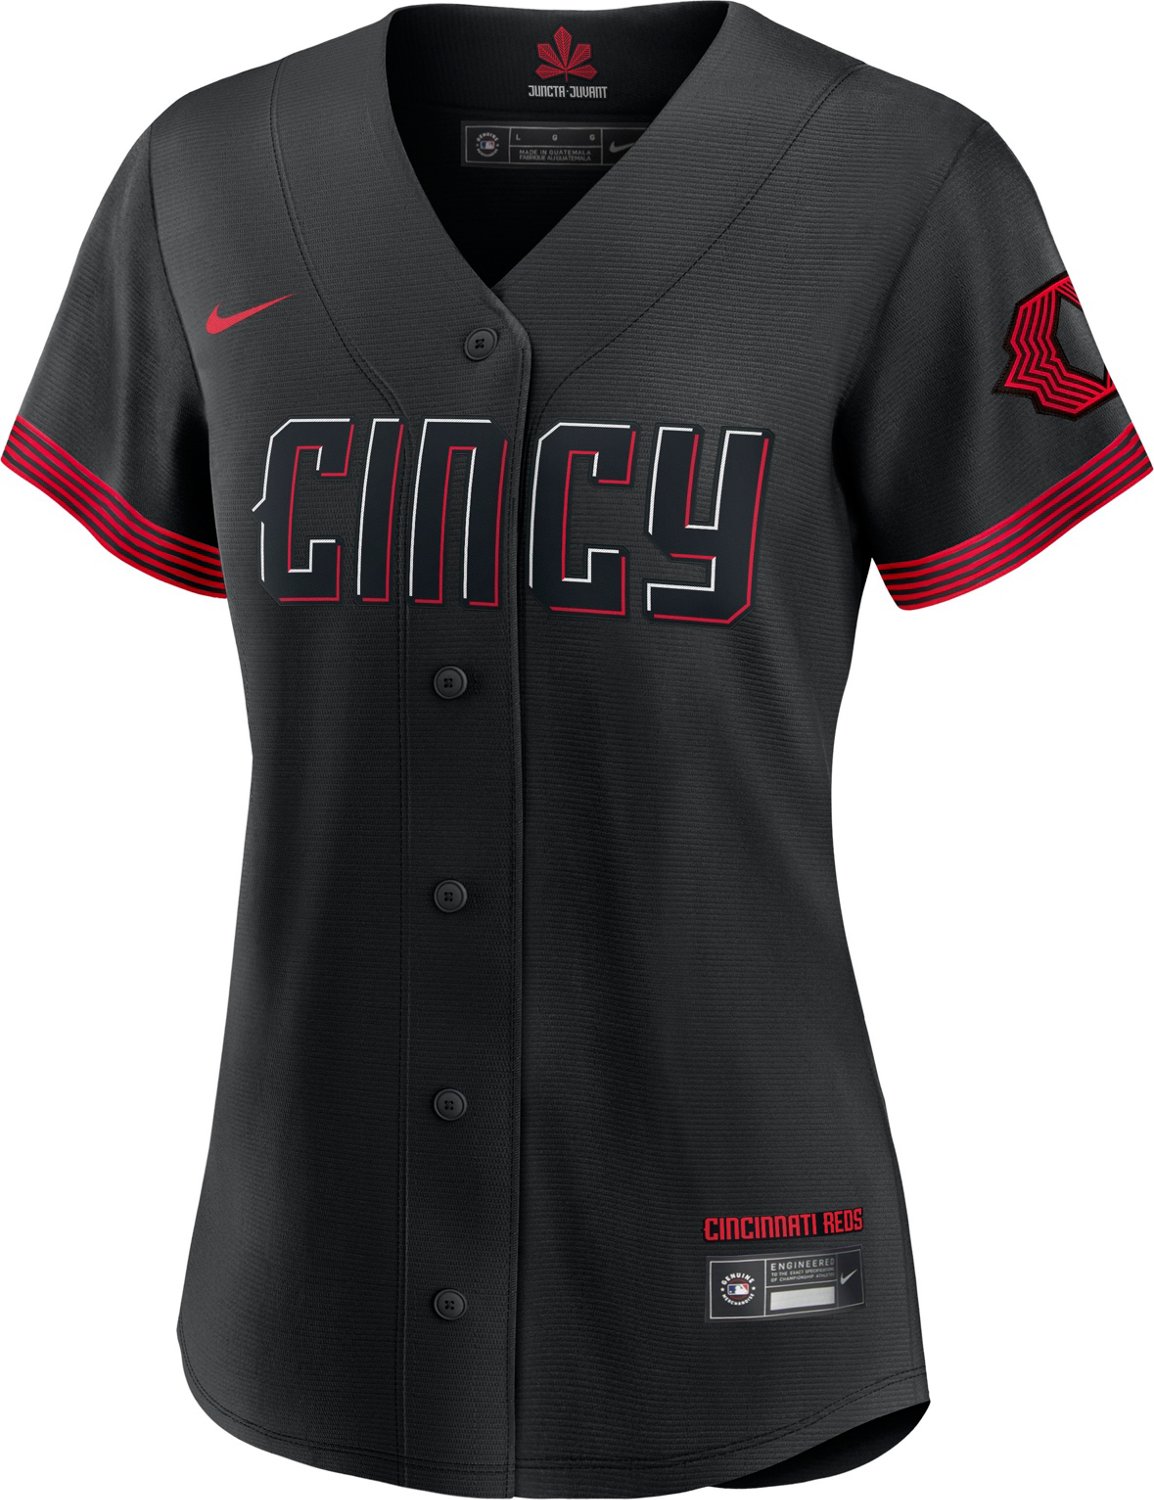 MLB Cincinnati Reds City Connect (Joey Votto) Men's Replica Baseball Jersey.